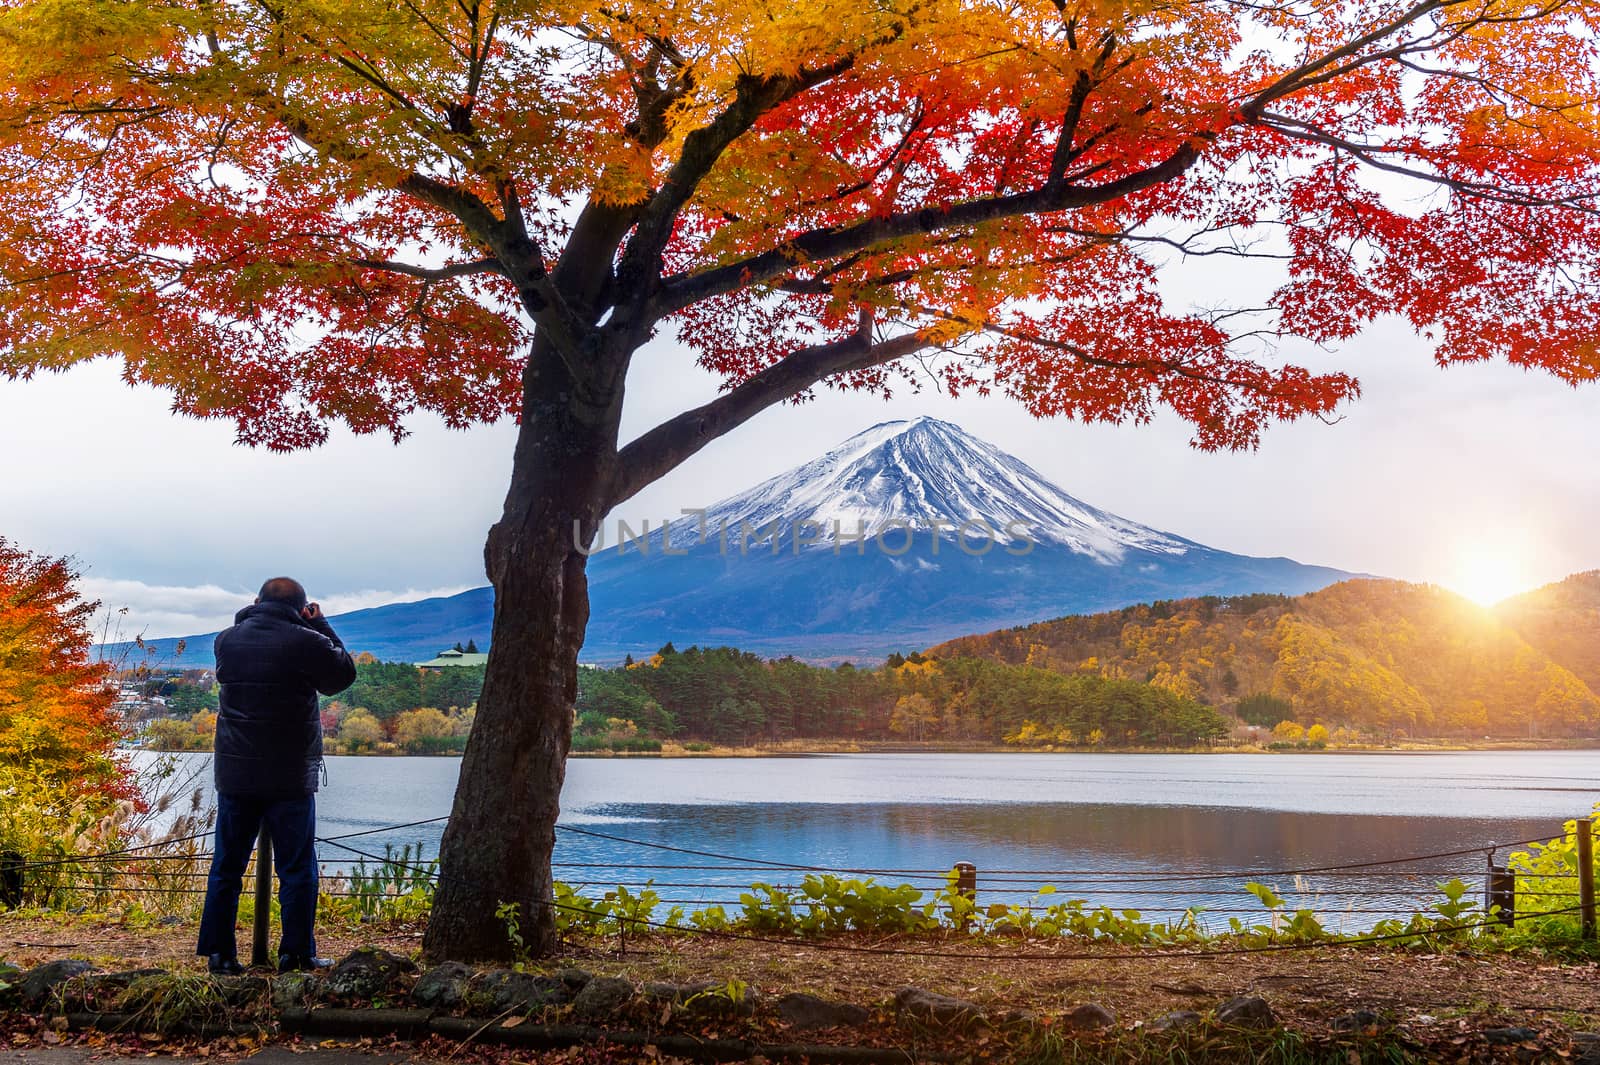 Autumn Season and Fuji mountain at Kawaguchiko lake, Japan. Photographer take a photo at Fuji mt. by gutarphotoghaphy